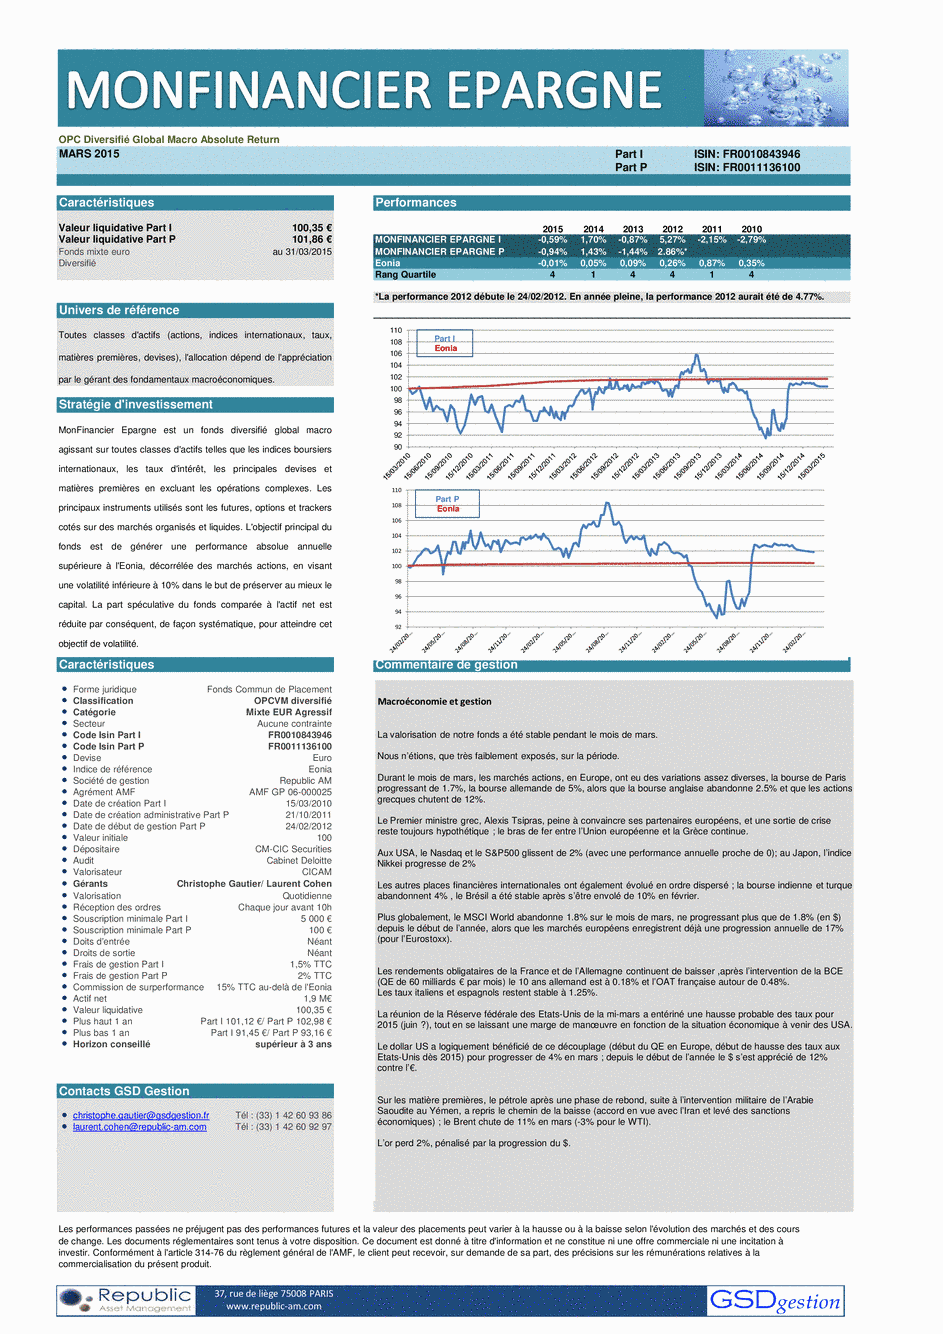 Reporting Monfinancier Epargne I - 01/04/2015 - French